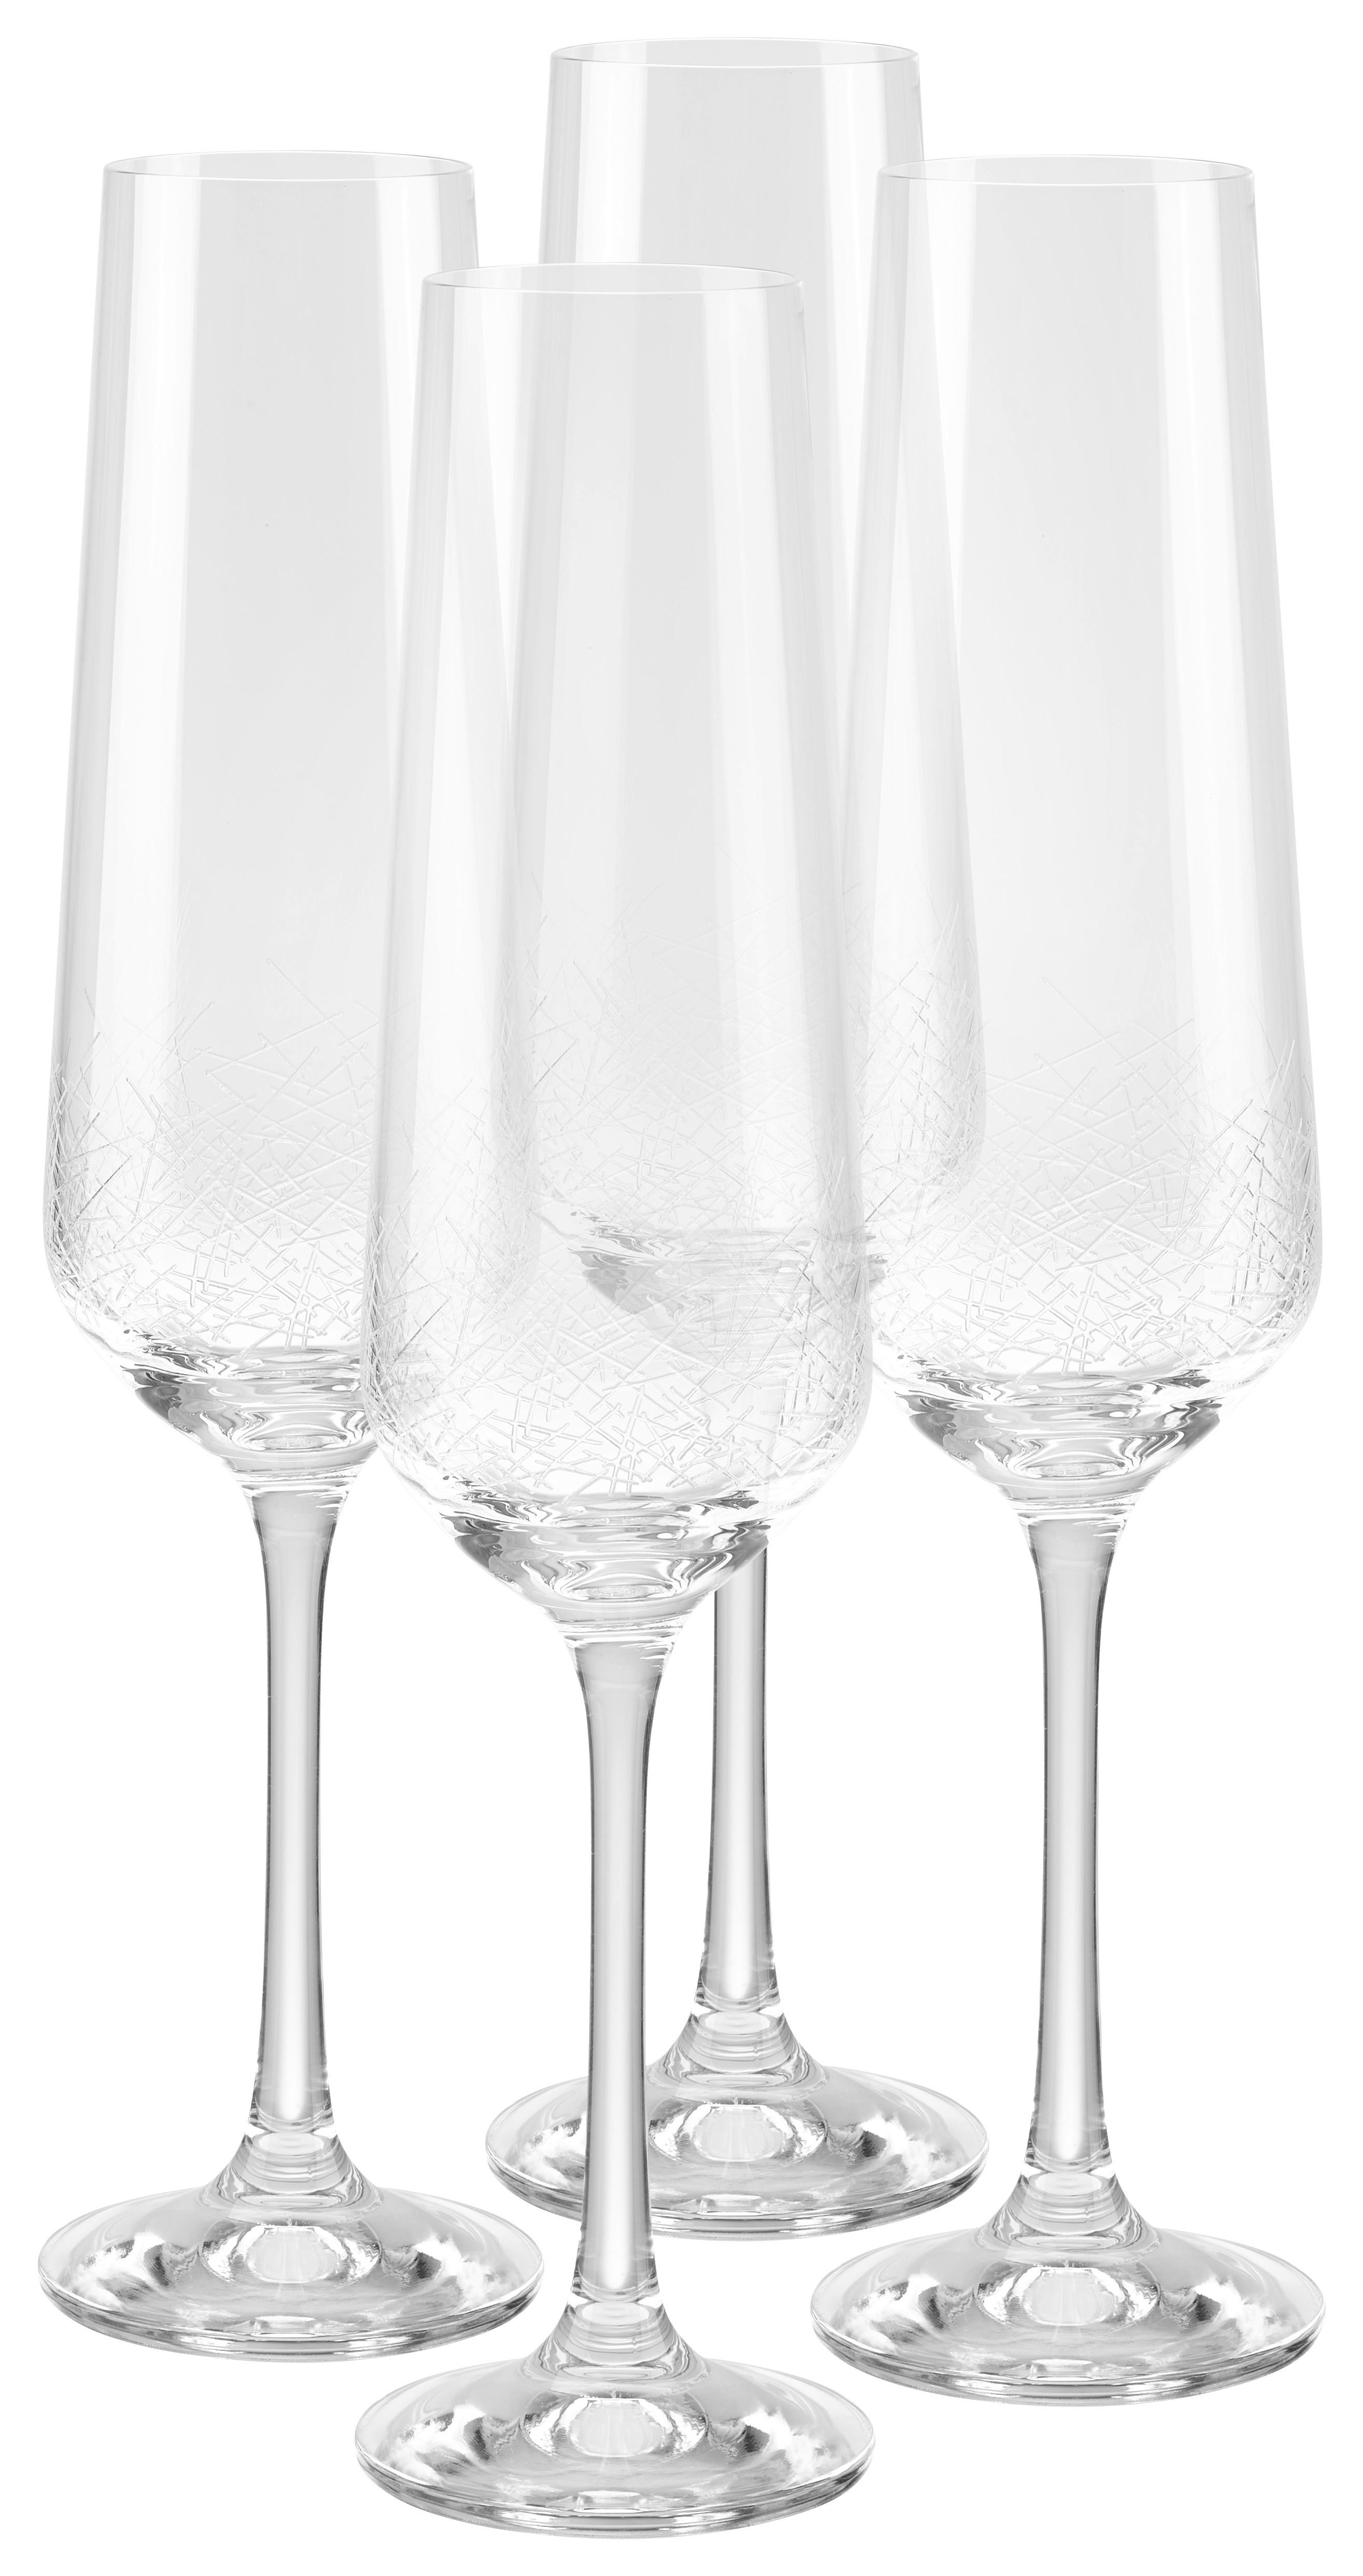 Set pahare Crystal chic - clar, Modern, sticlă (0,2l) - Premium Living